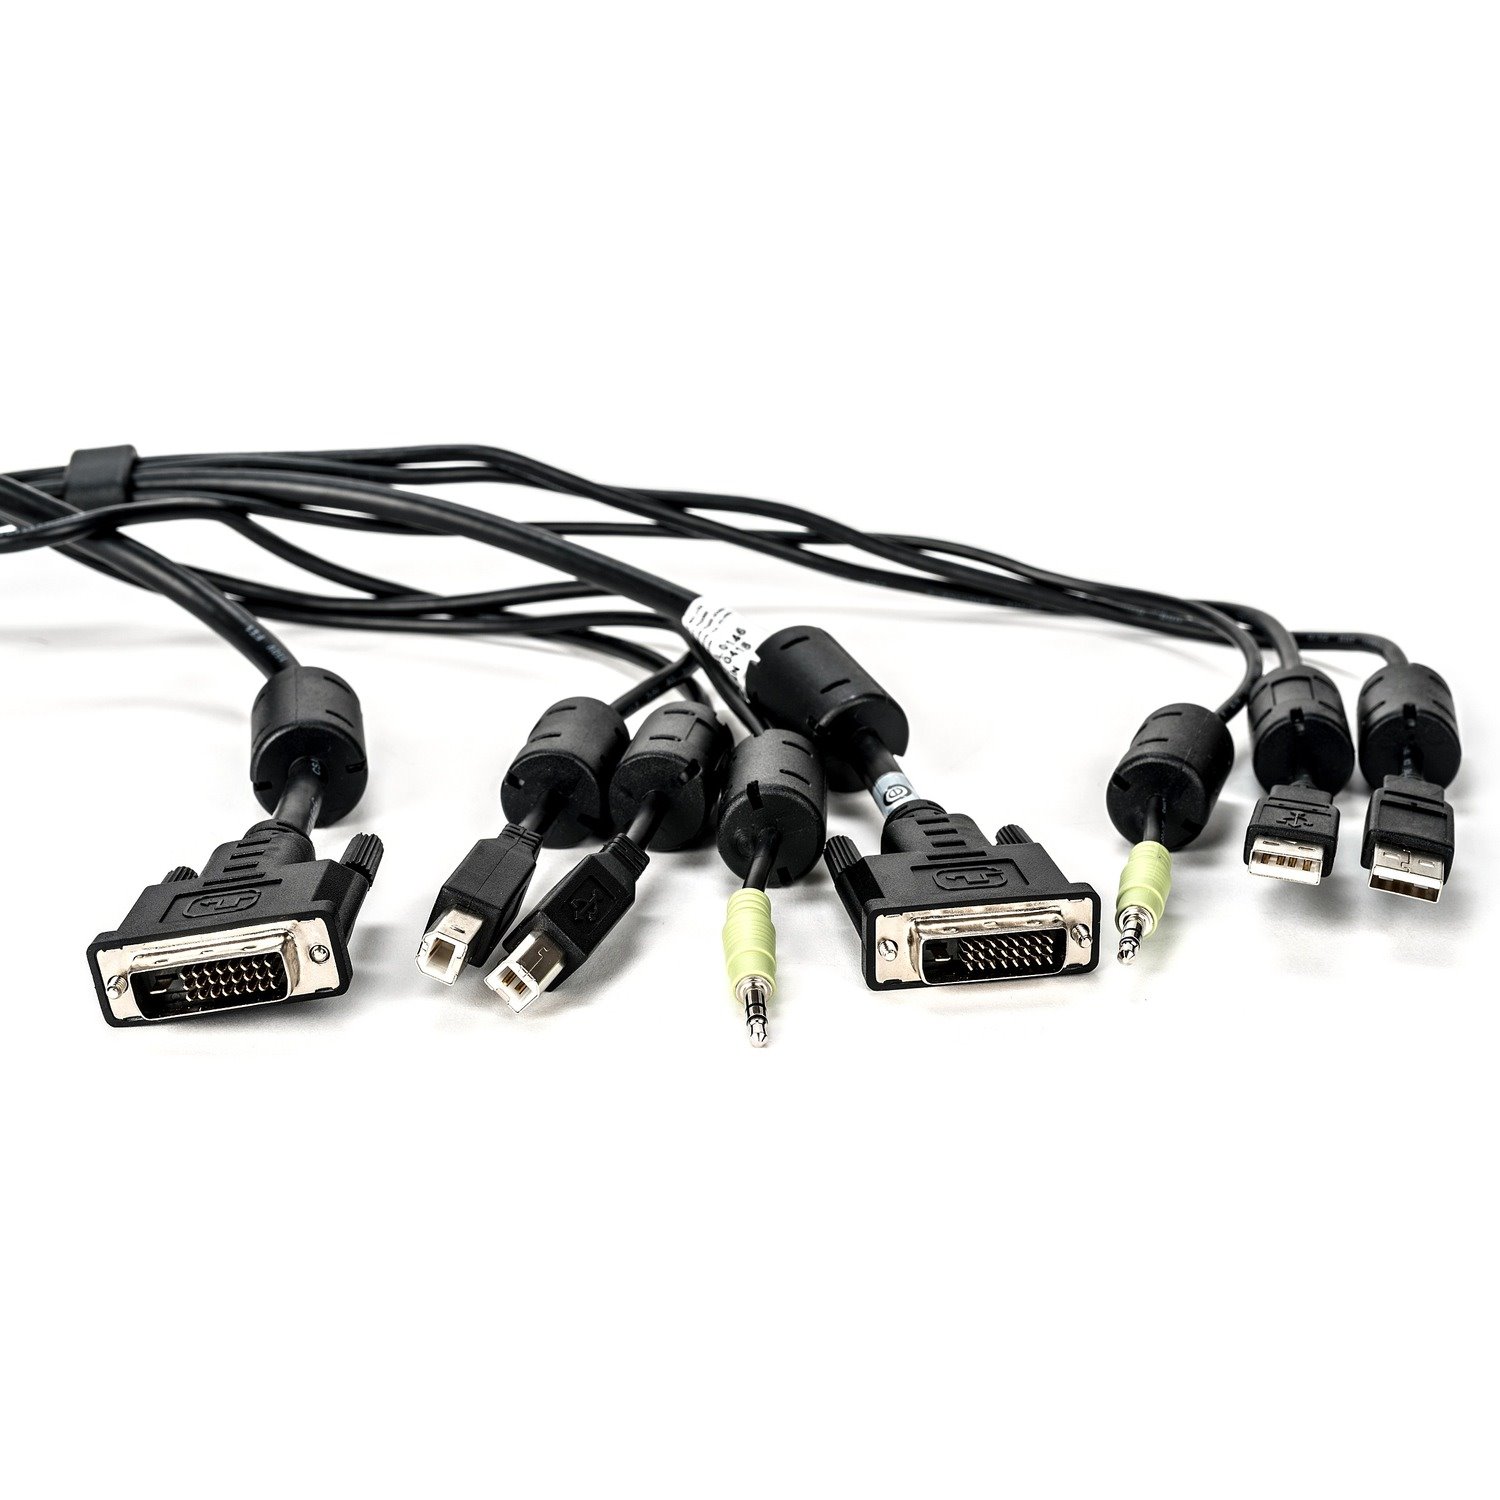 VERTIV 3.05 m KVM Cable for KVM Switch, Audio Device, Workstation